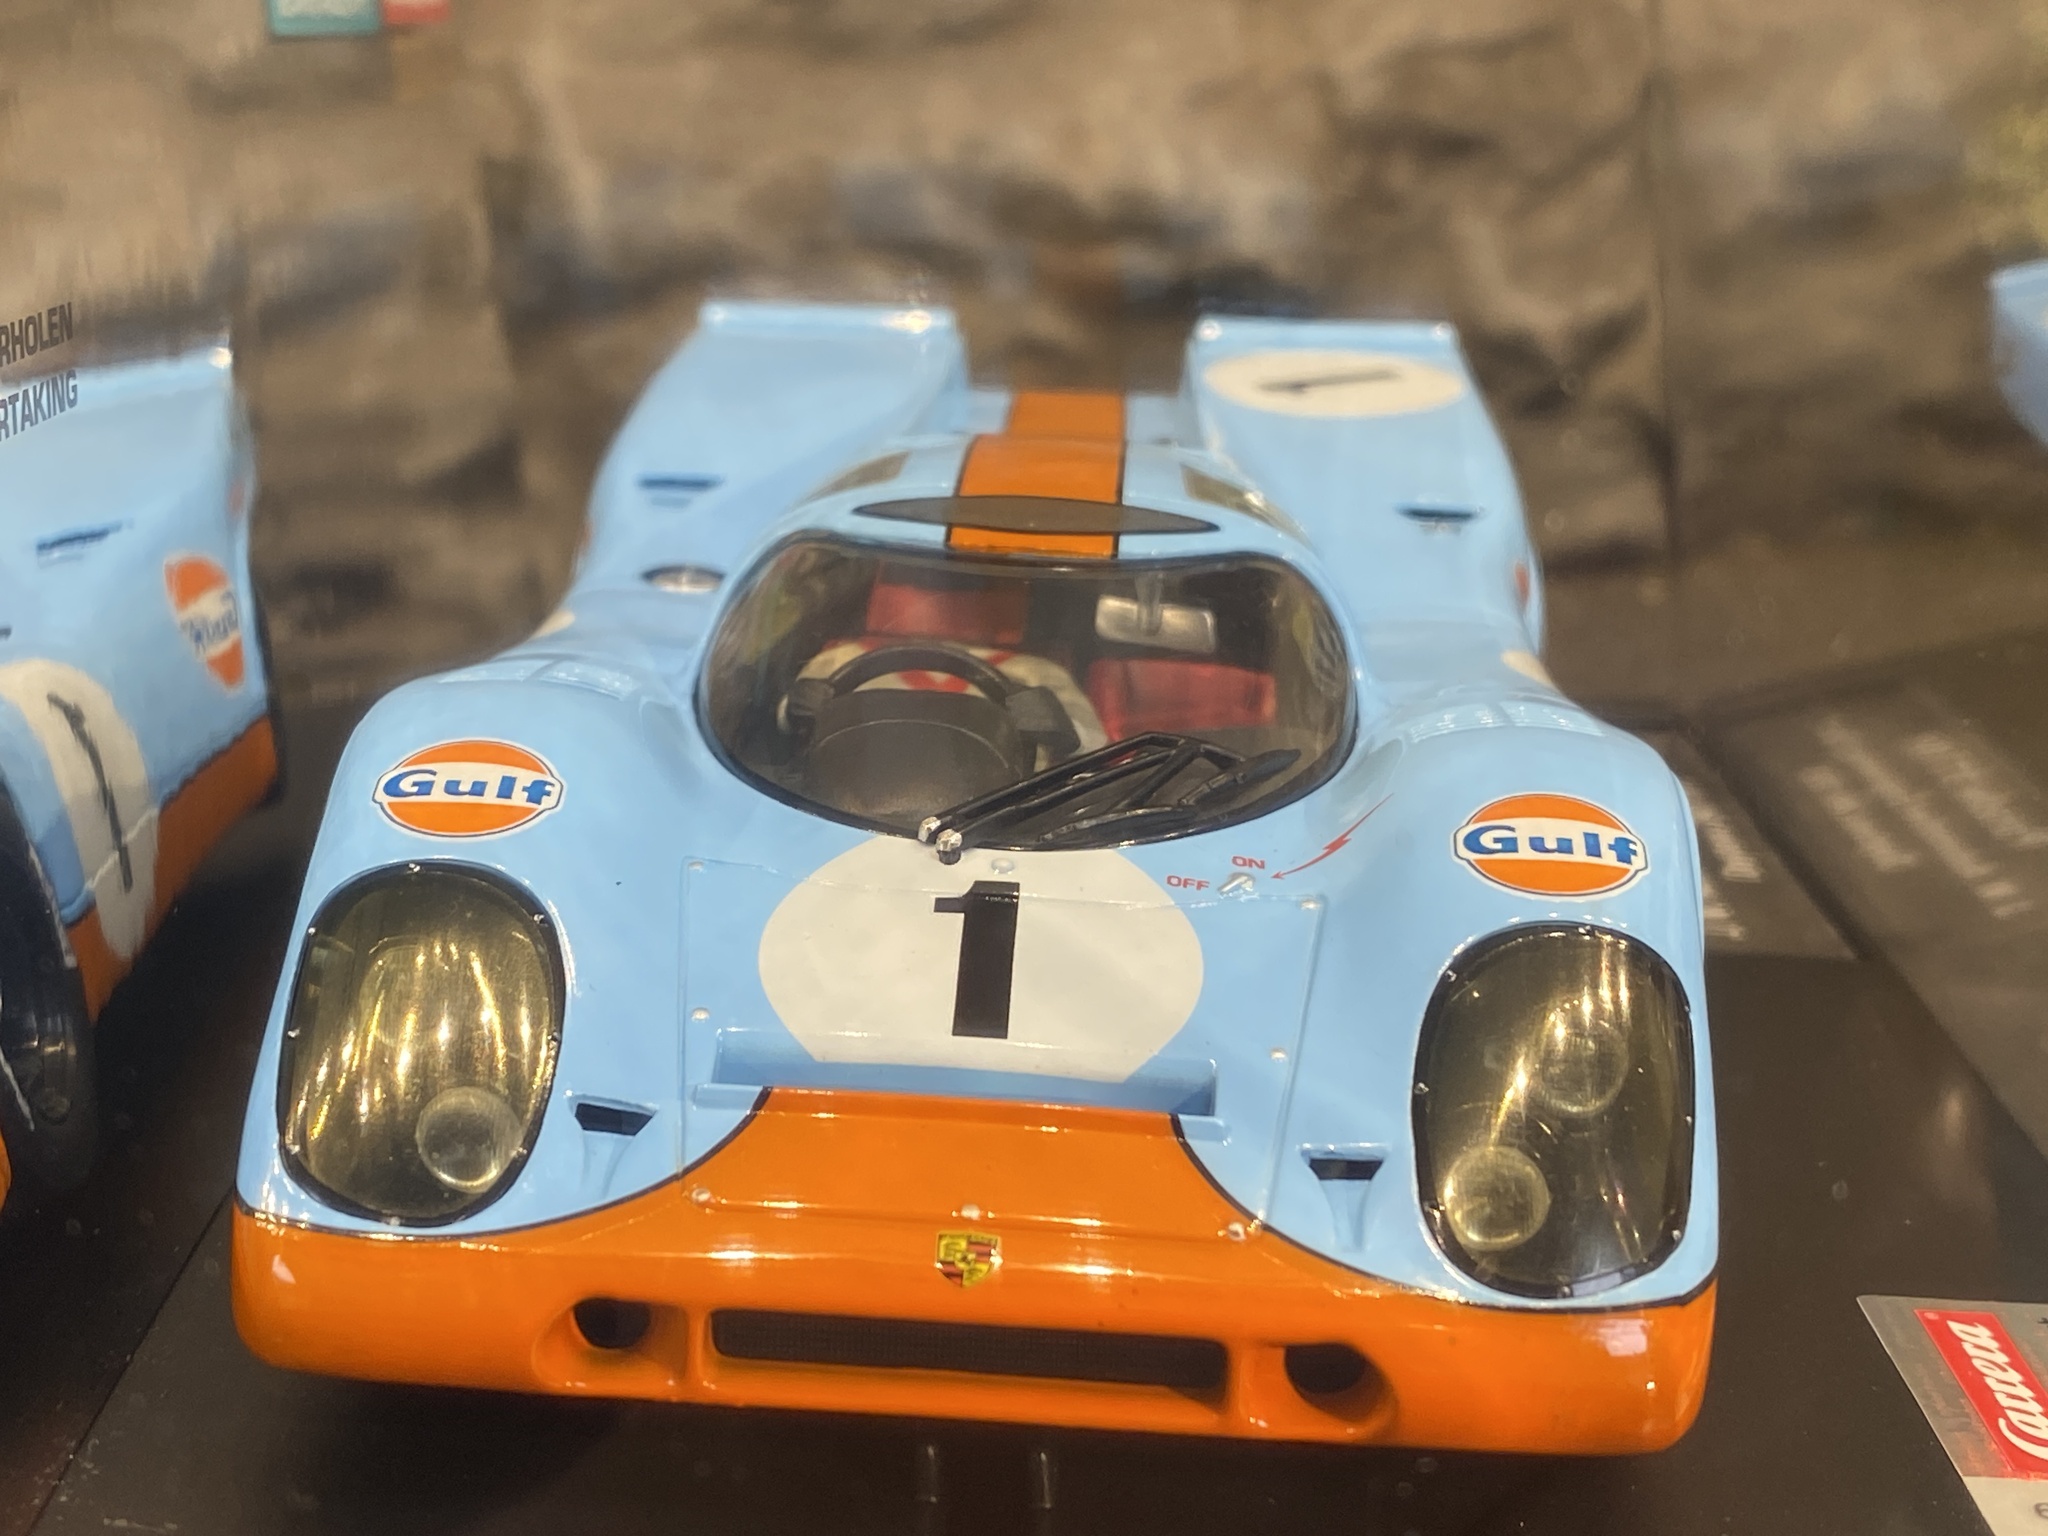 Skala 1/24 Digital/Analog slot car fr Carrera: Porsche 917 KH #1 "GULF"